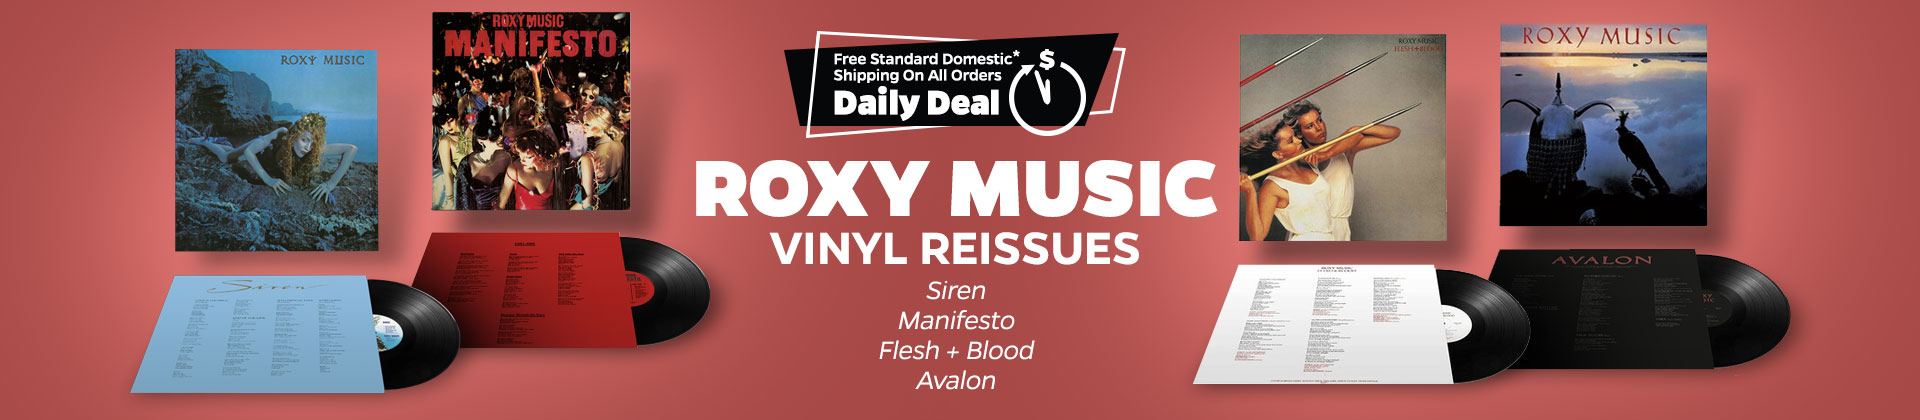 Roxy Music Reissued! 